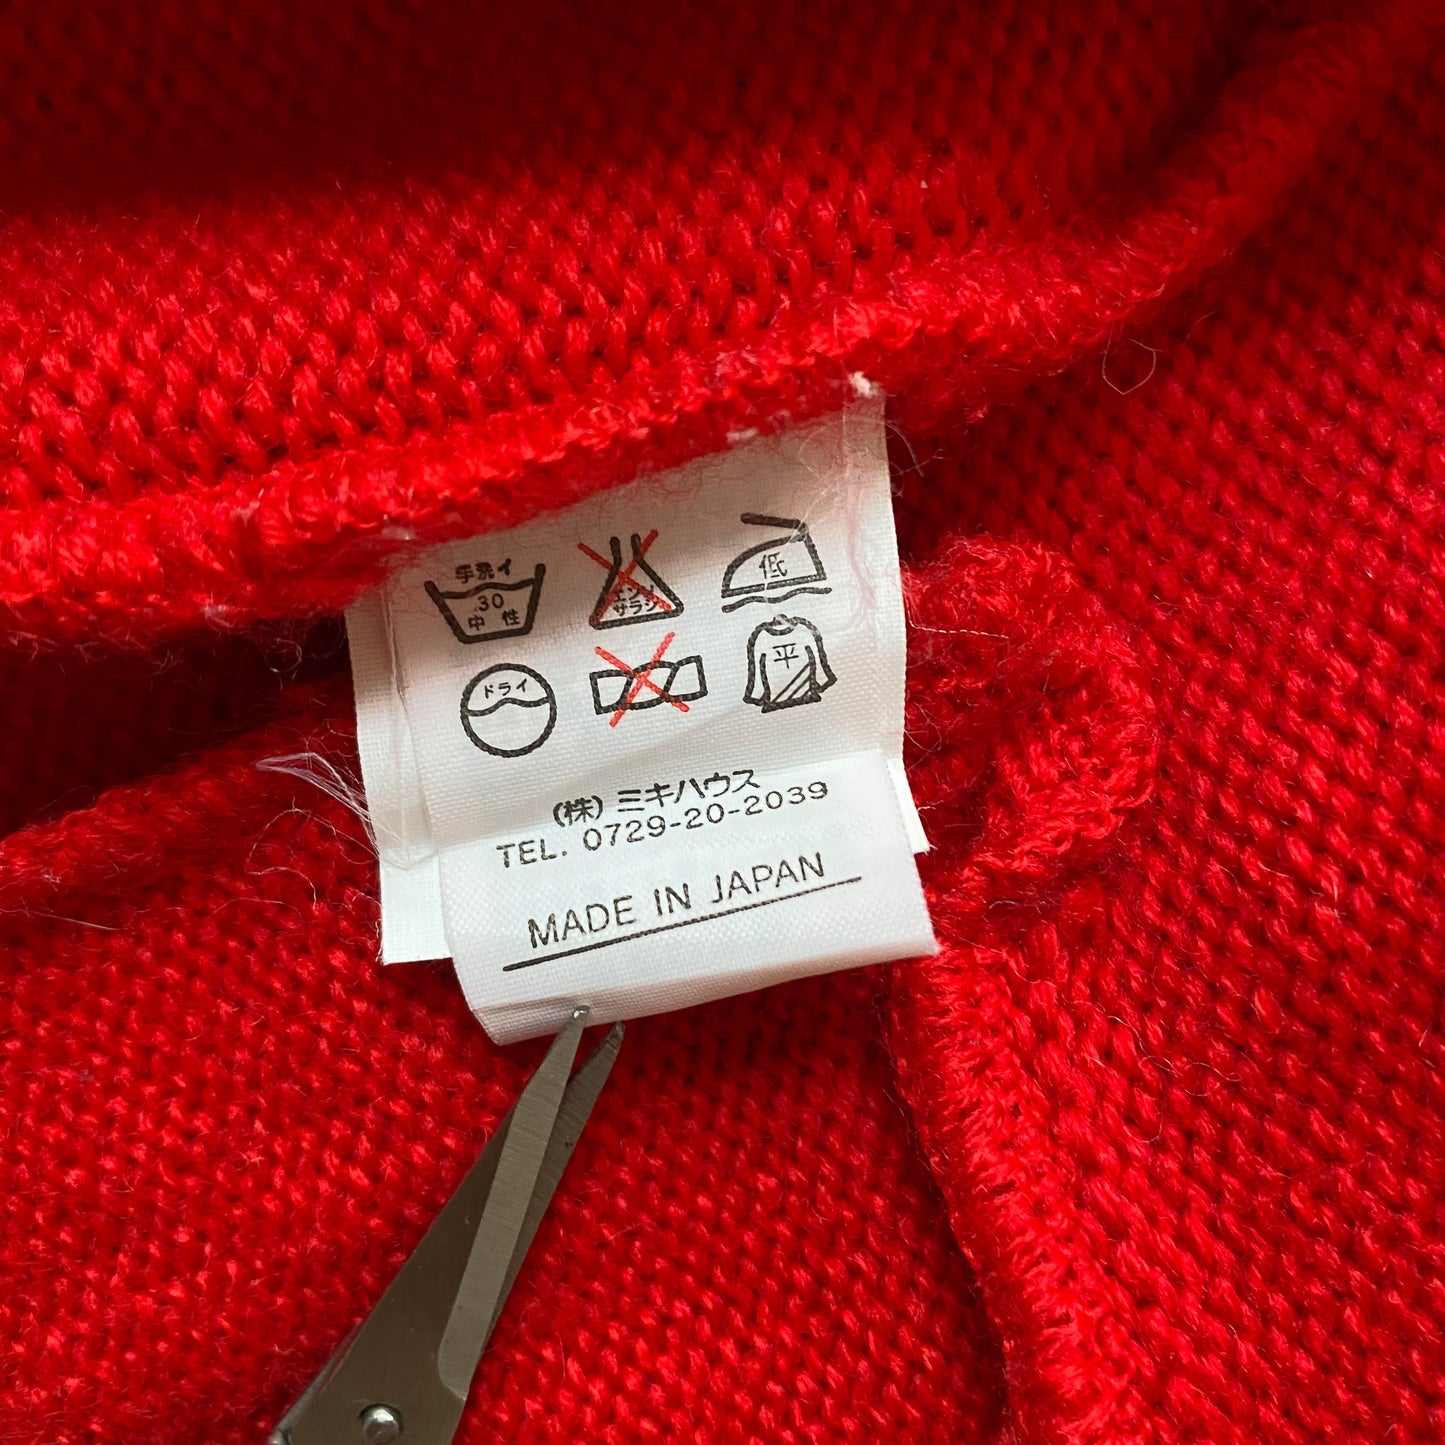 Japan Brand Knit Red Cardigan (2-3Y)